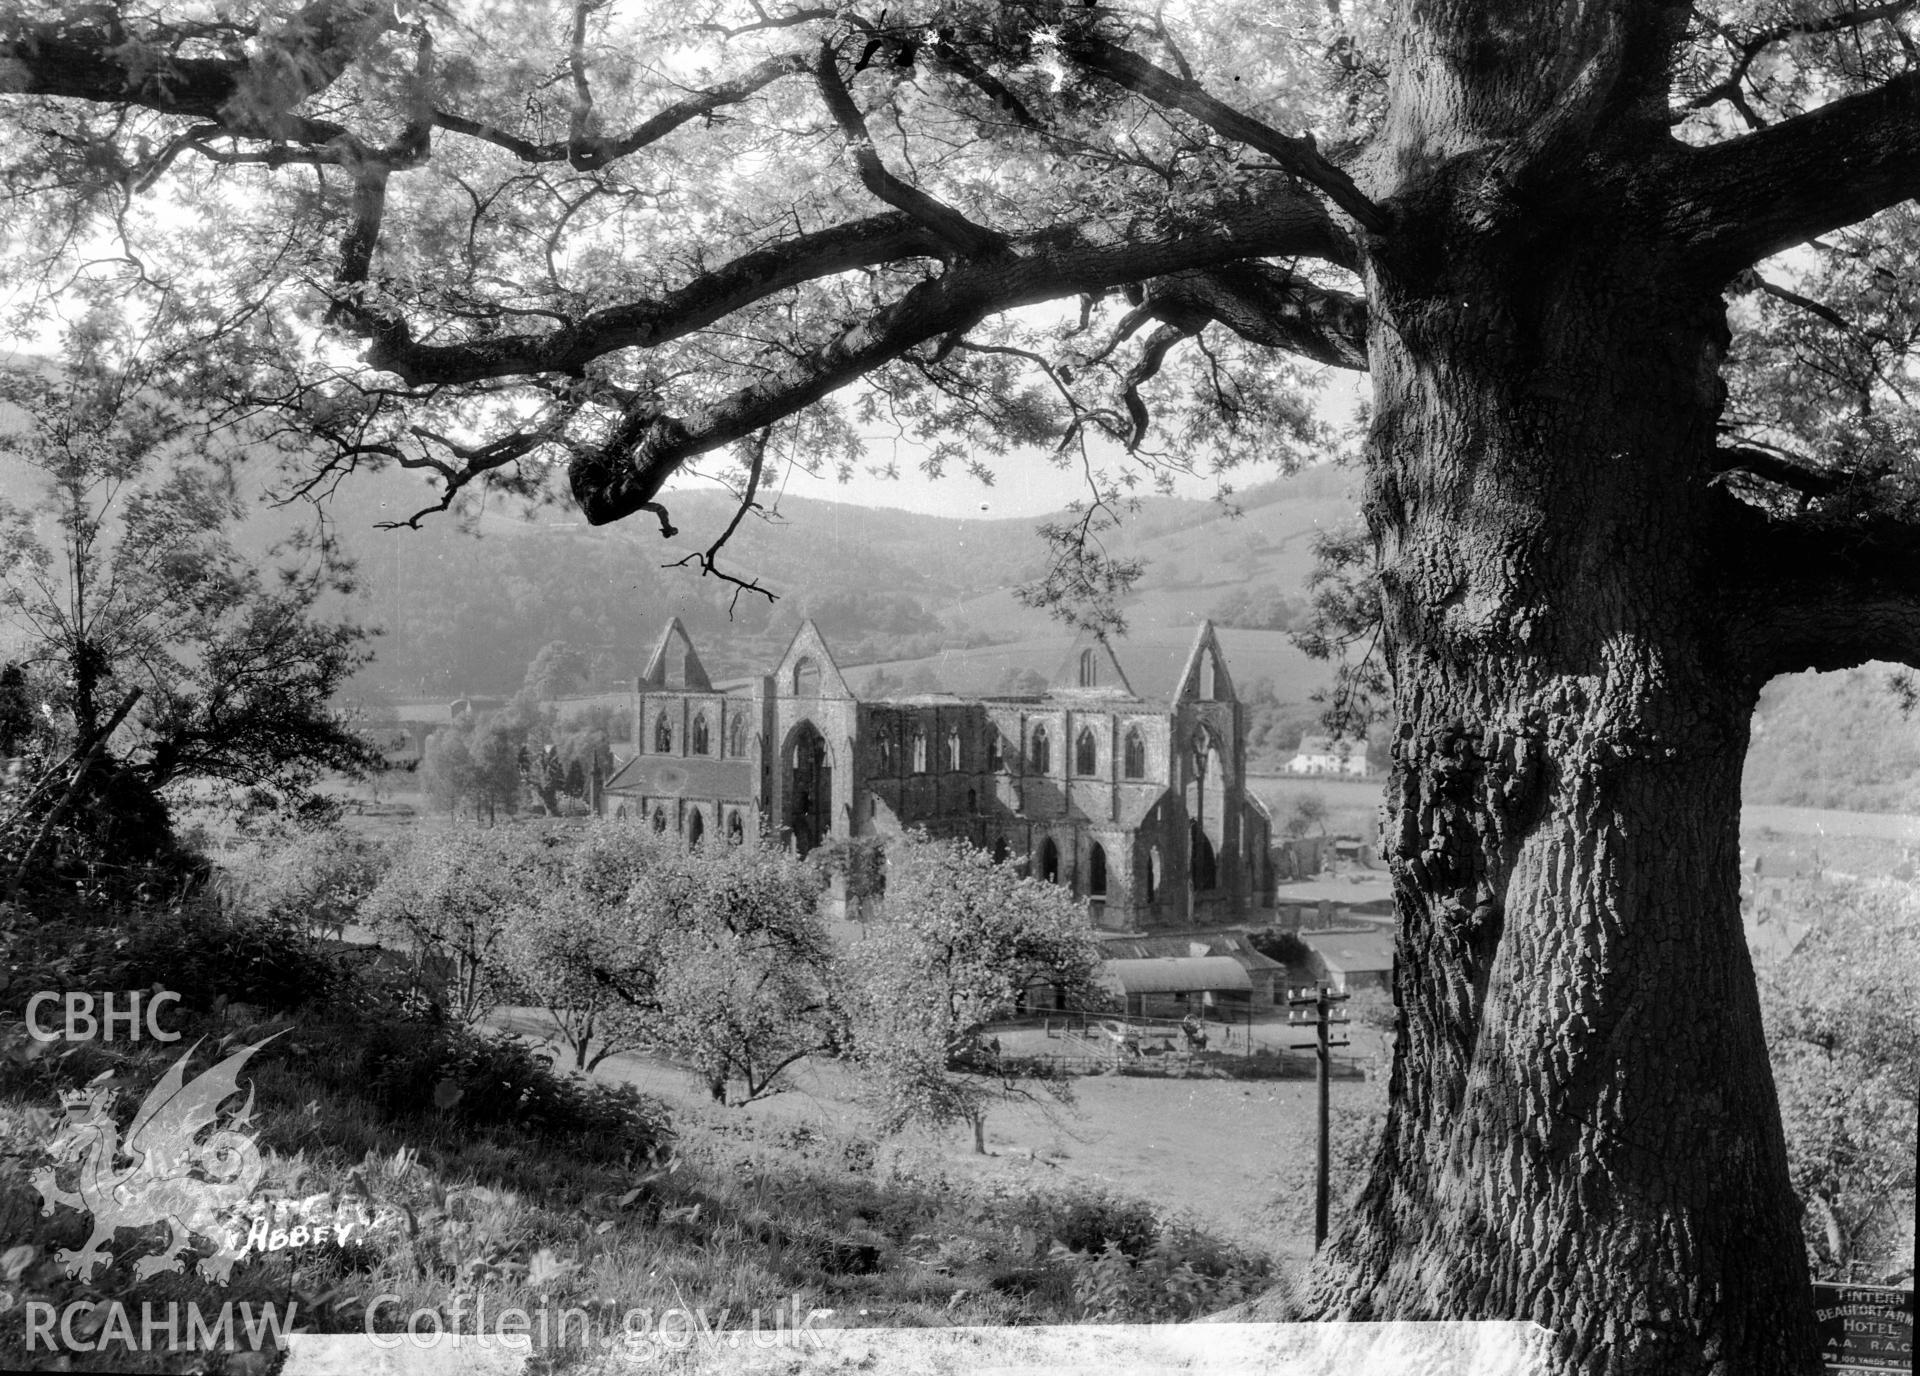 View of Tintern Abbey